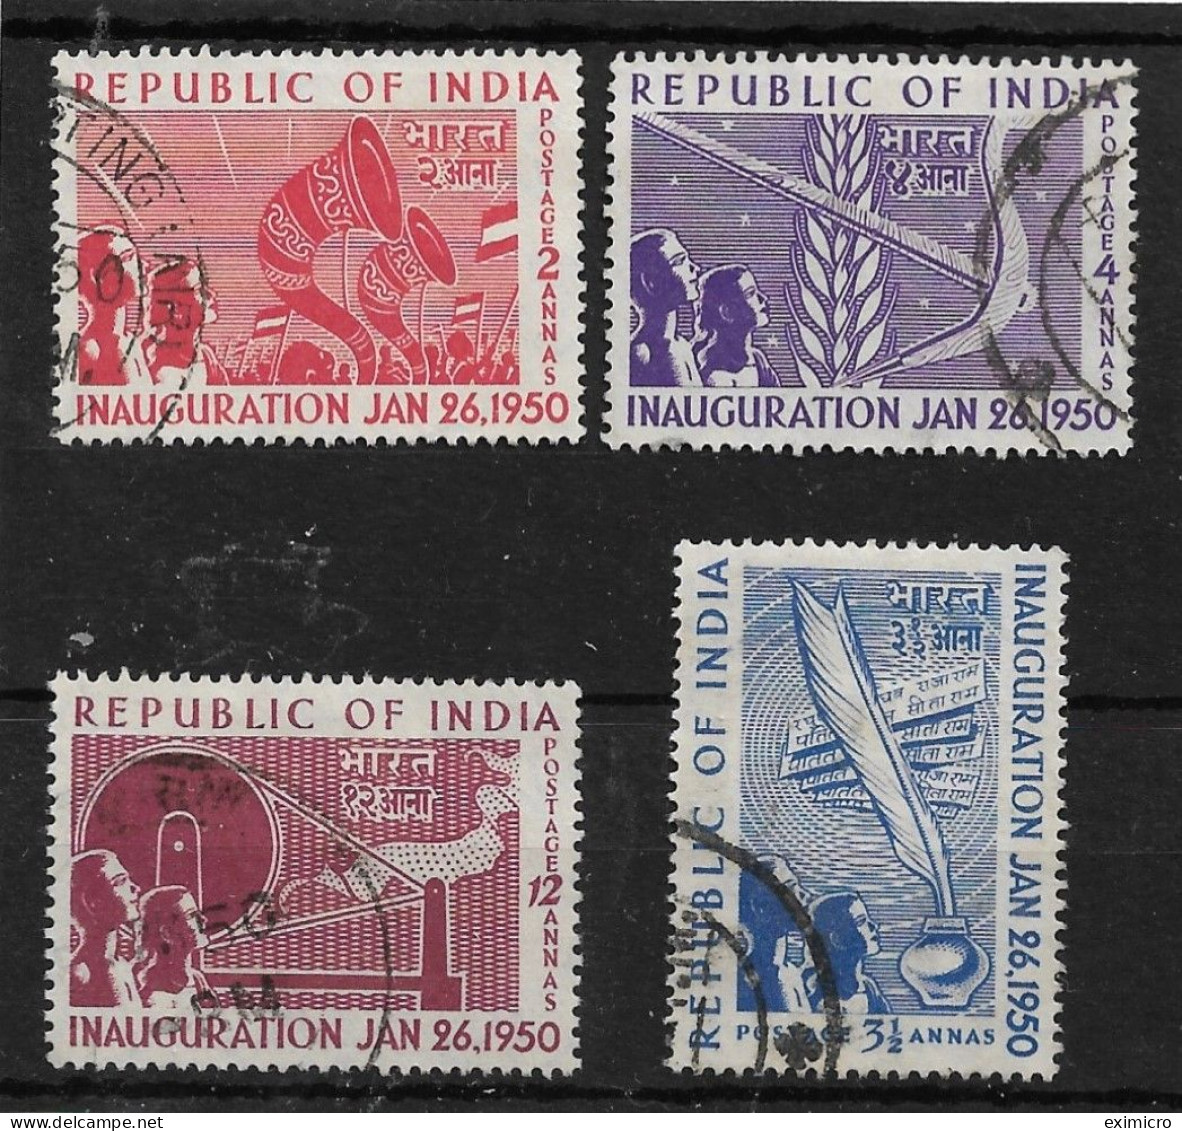 INDIA 1950 INAUGURATION OF REPUBLIC SET SG 329/332 FINE USED Cat £17 - Gebraucht